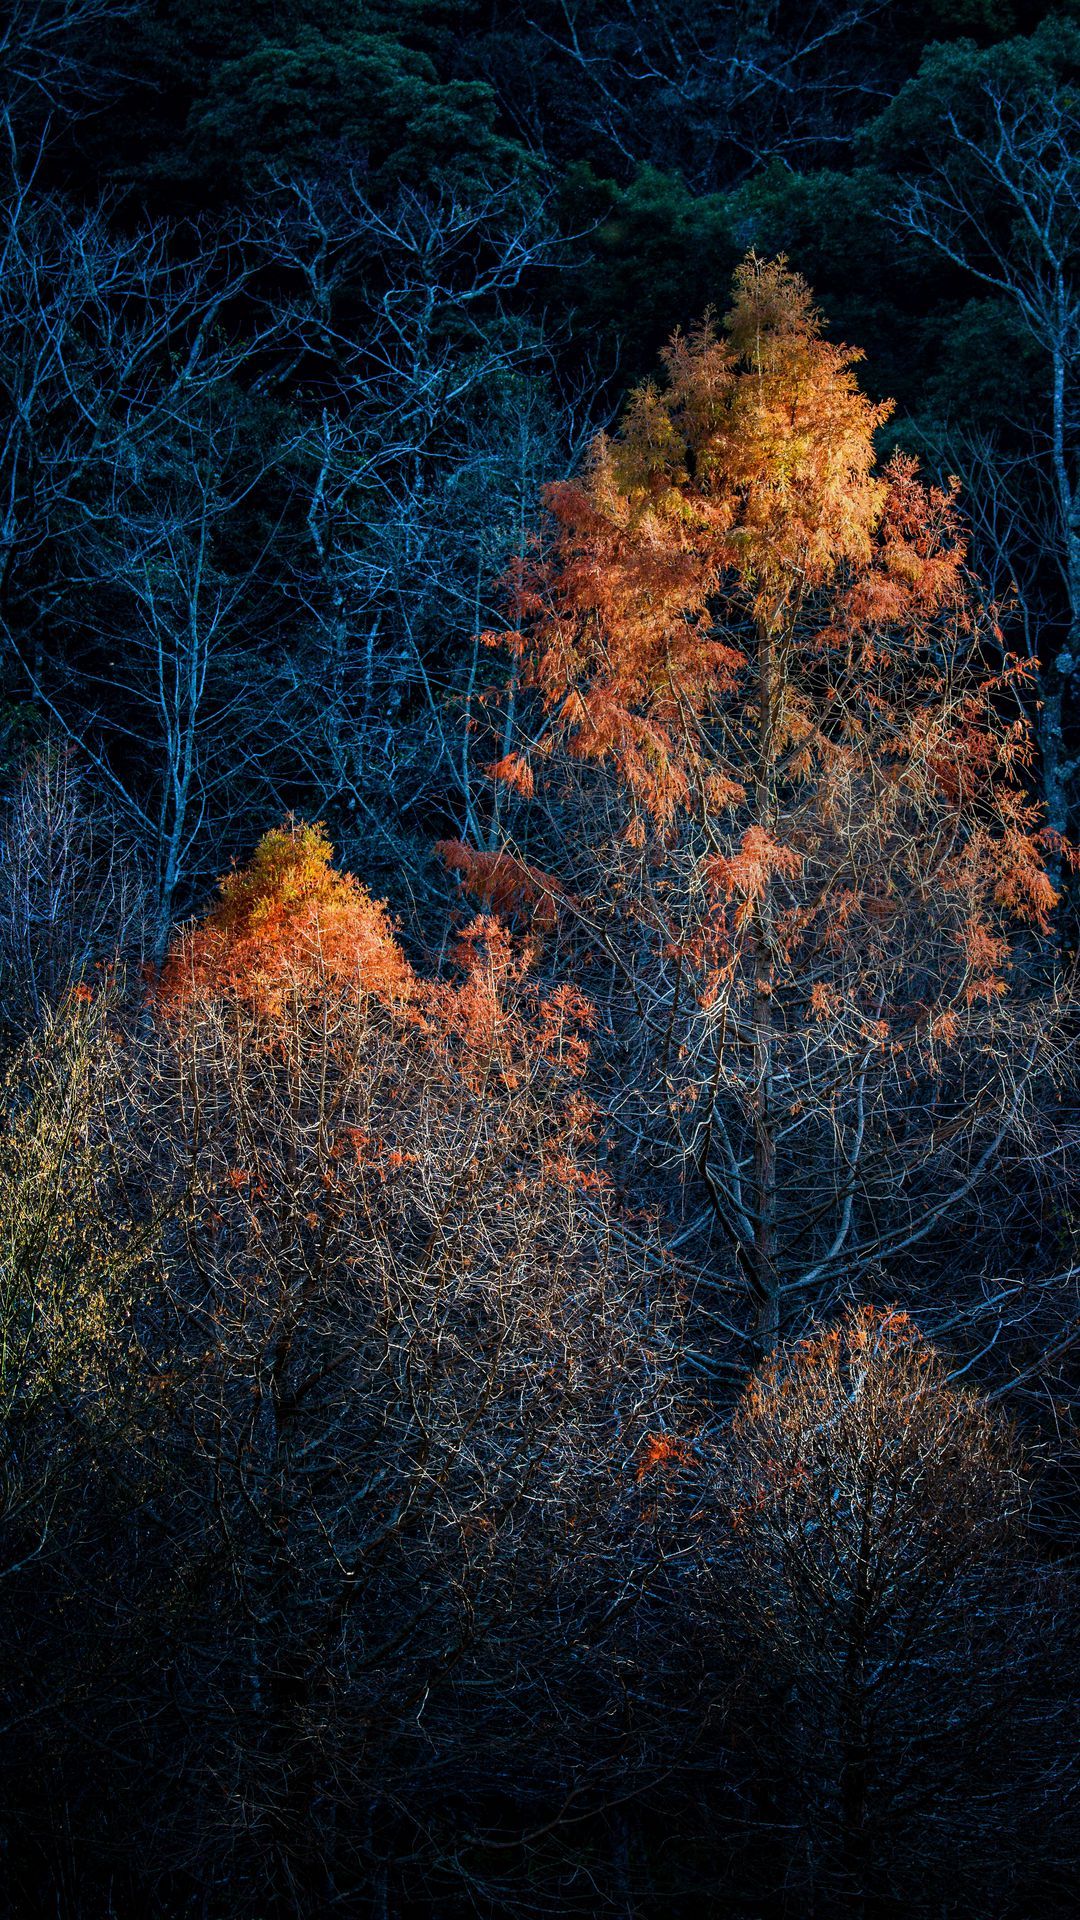 Download wallpaper 1080x1920 trees, autumn, dark, branches samsung galaxy s s note, sony xperia z, z z z htc one, lenovo vibe HD background